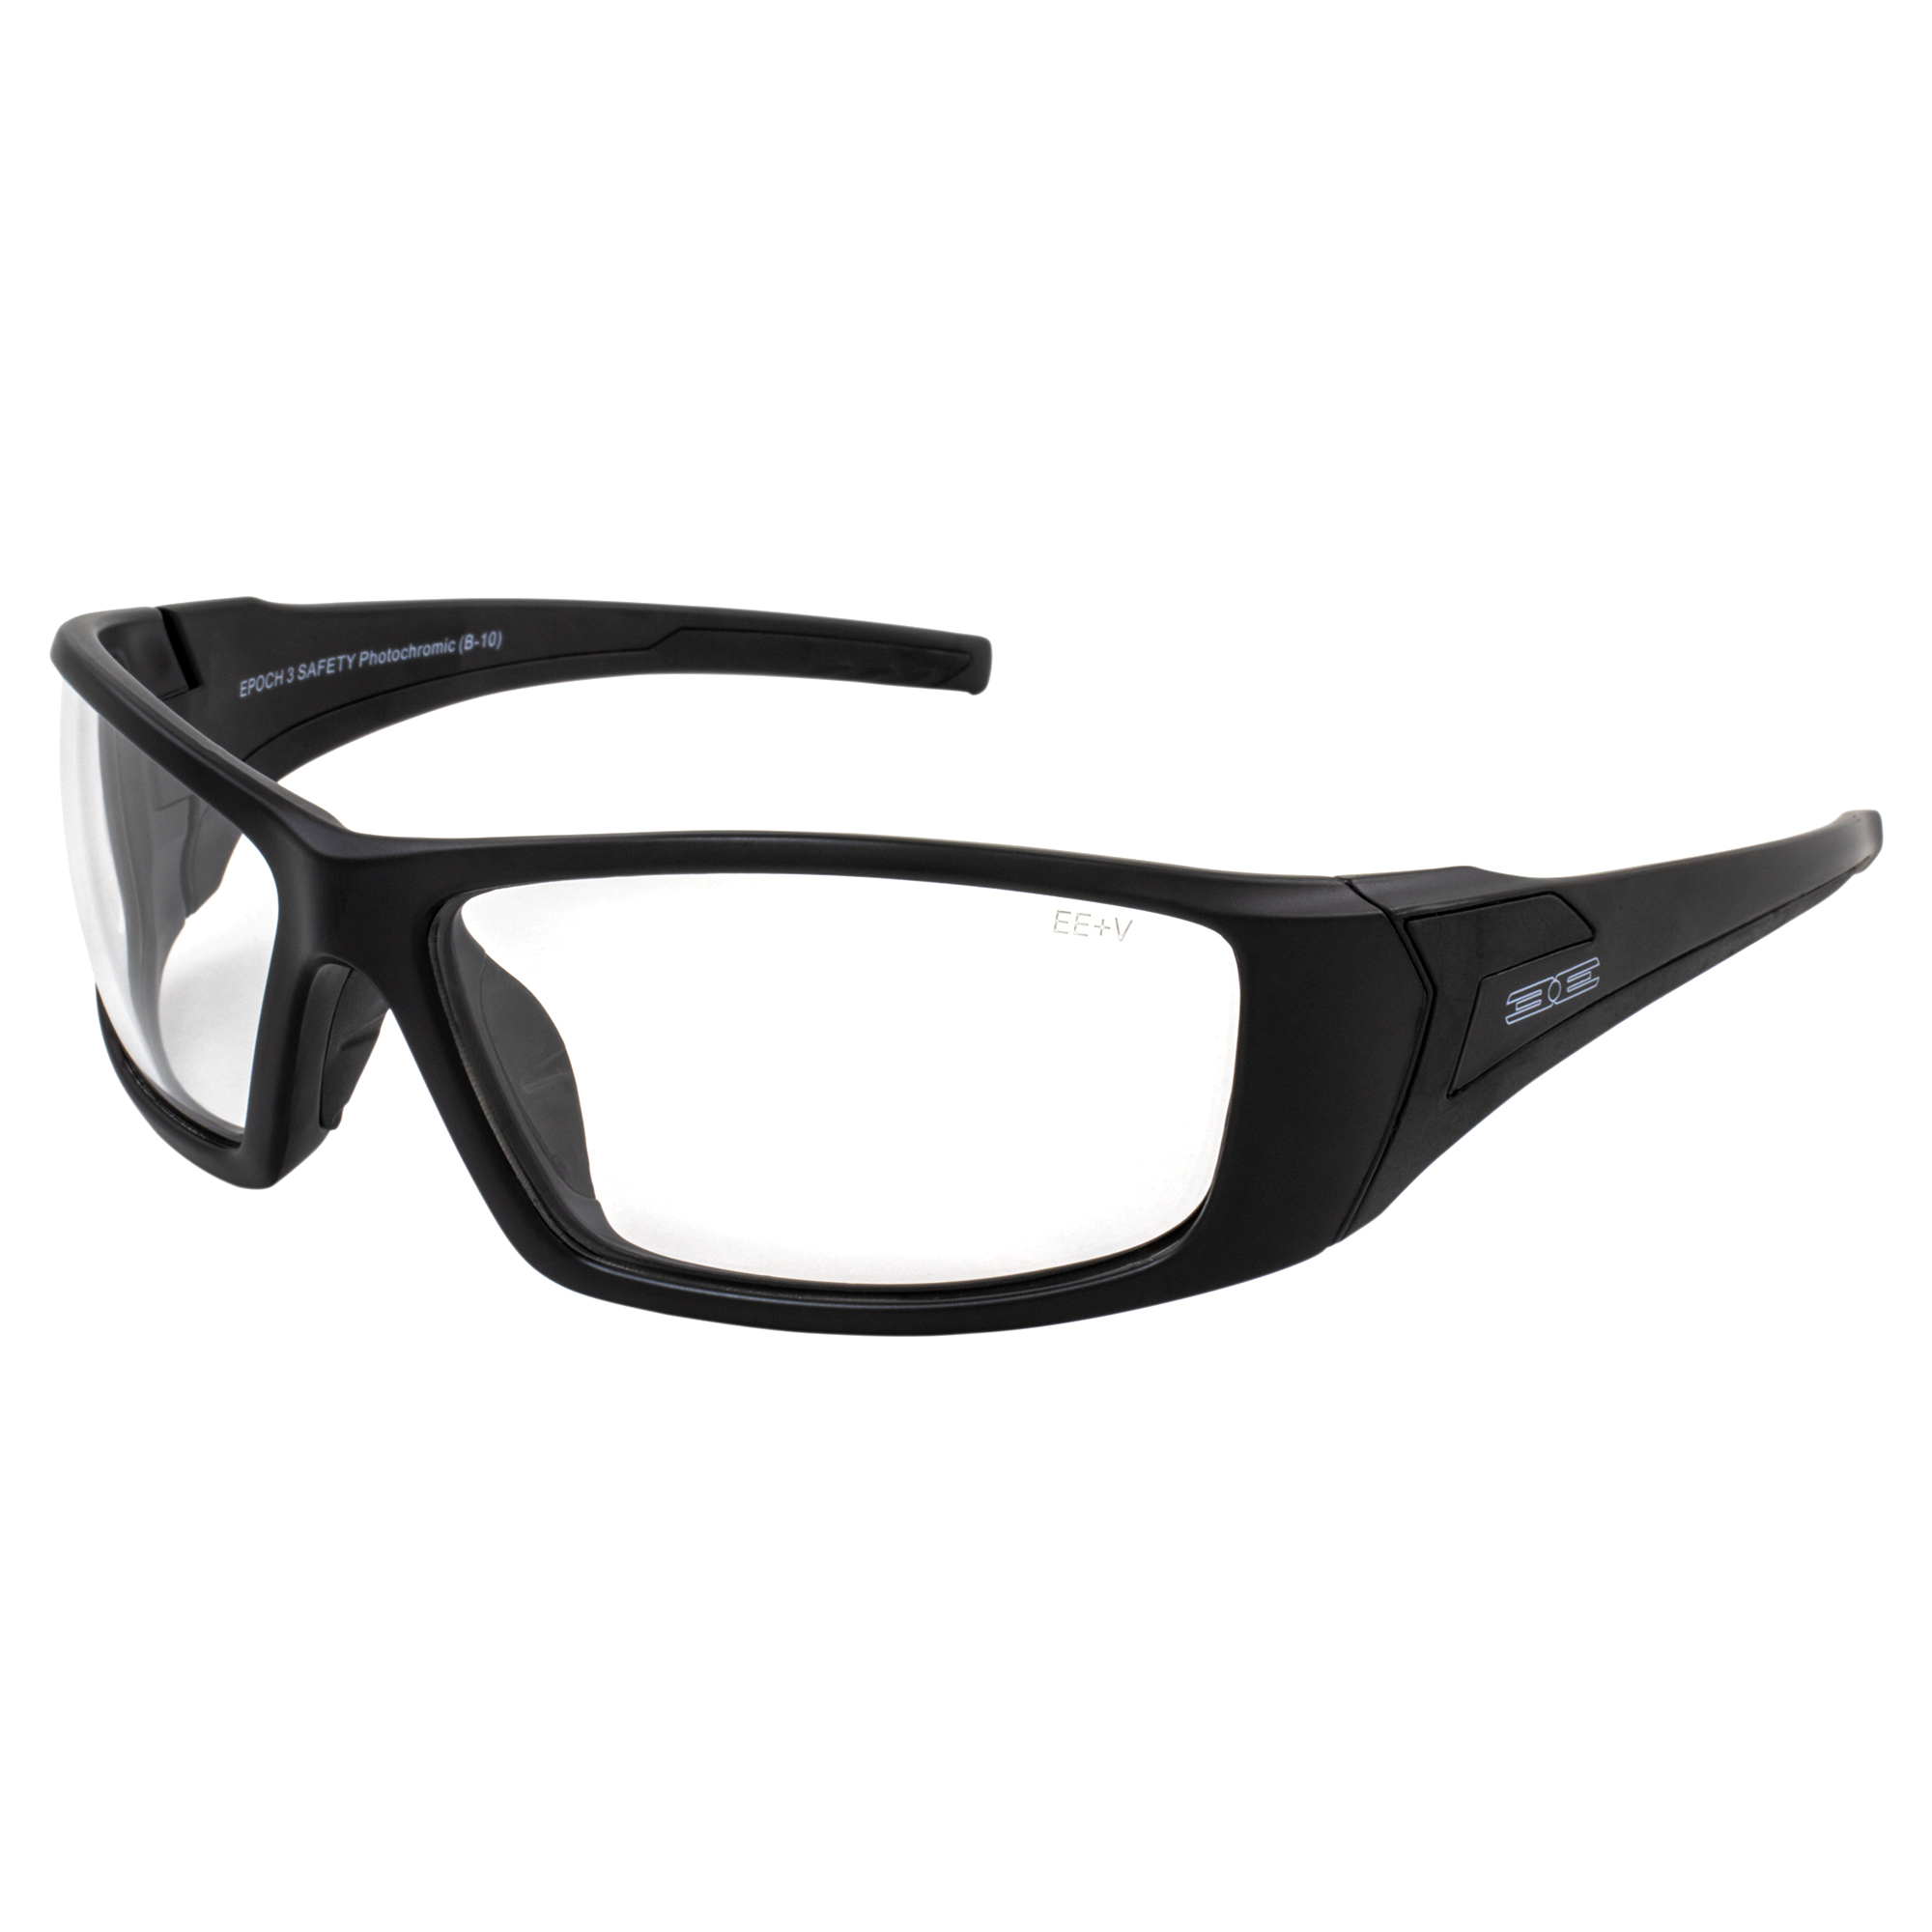 Epoch Eyewear EPOCH 3 Photochromic Motorcycle Sunglasses Black Frames Clear to Smoke lens - image 1 of 6